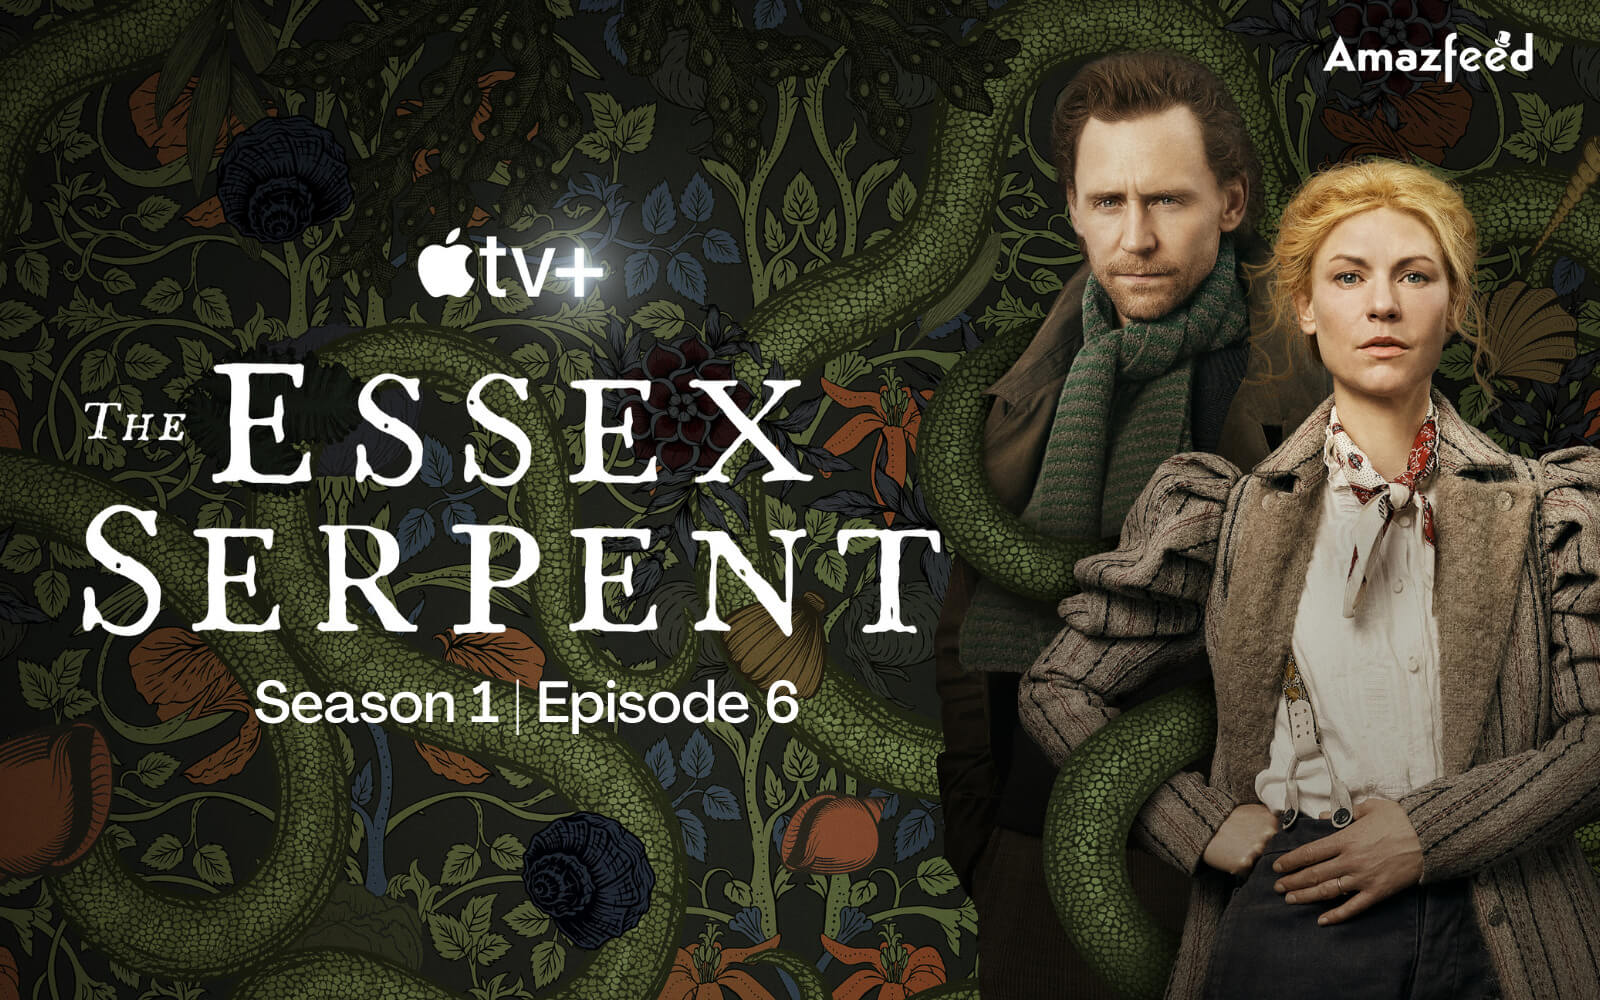 he Essex serpent Season 1 Episode 6 Release date